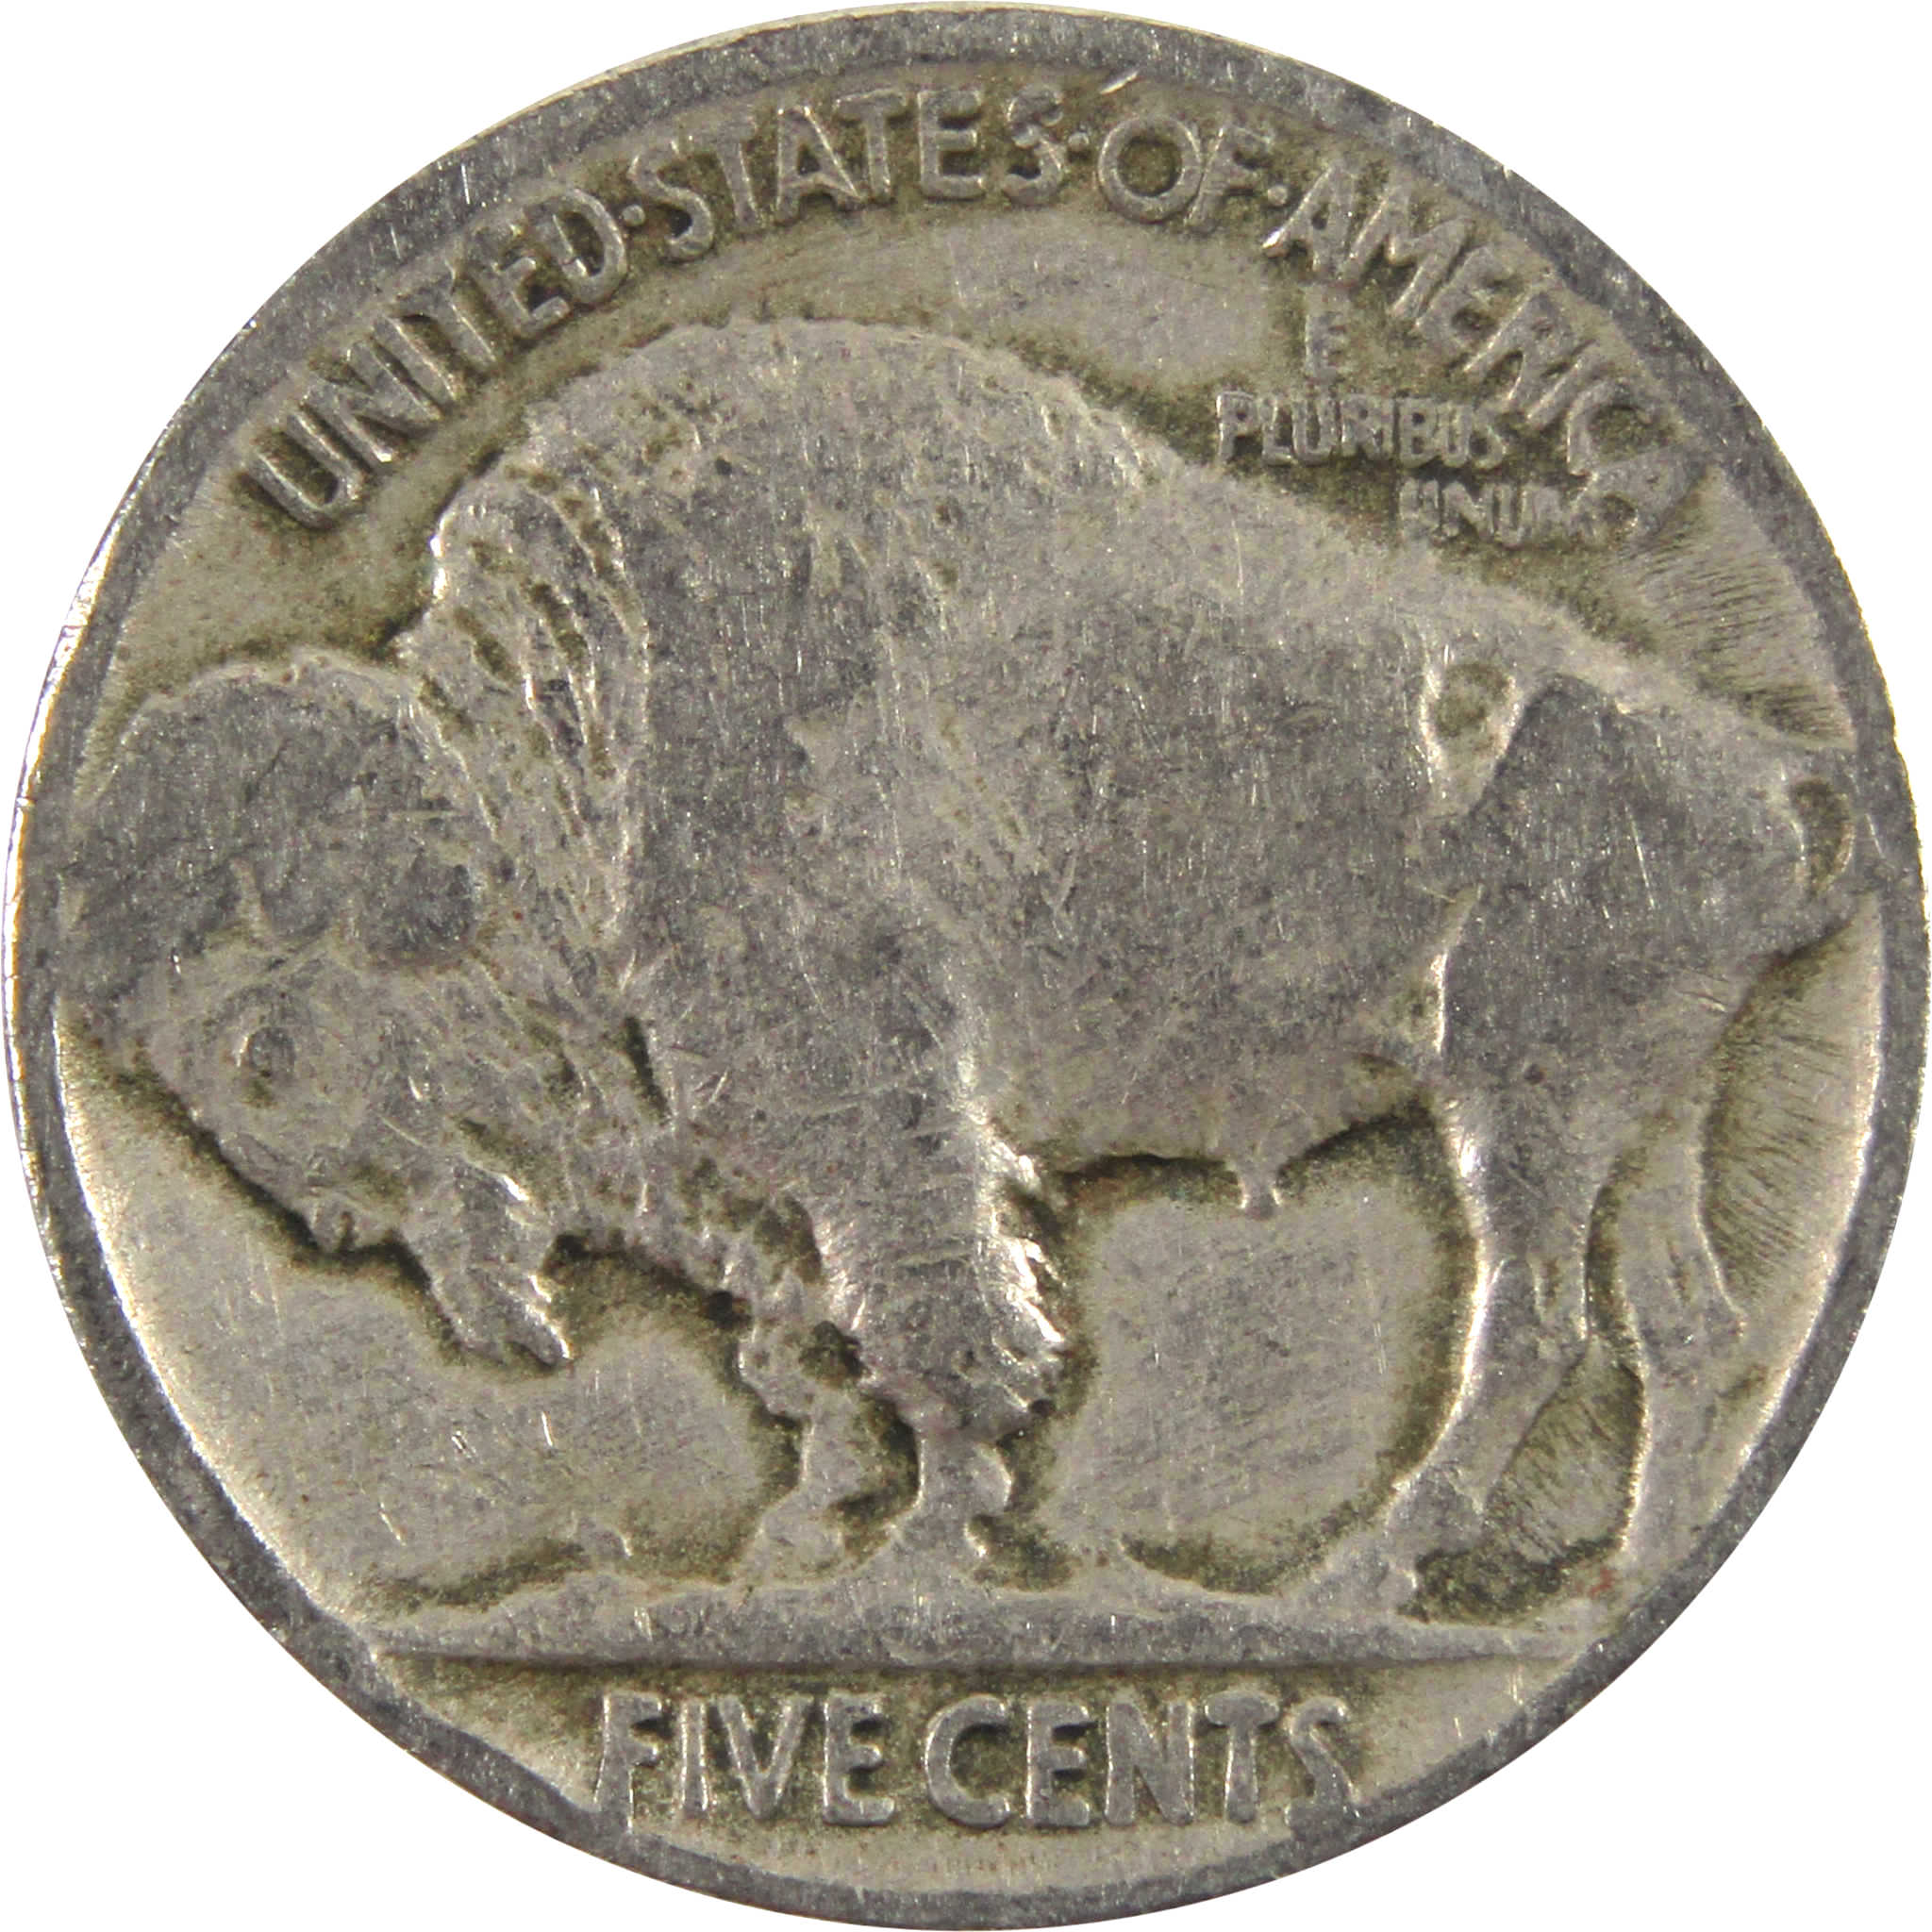 1928 Indian Head Buffalo Nickel AG About Good 5c Coin